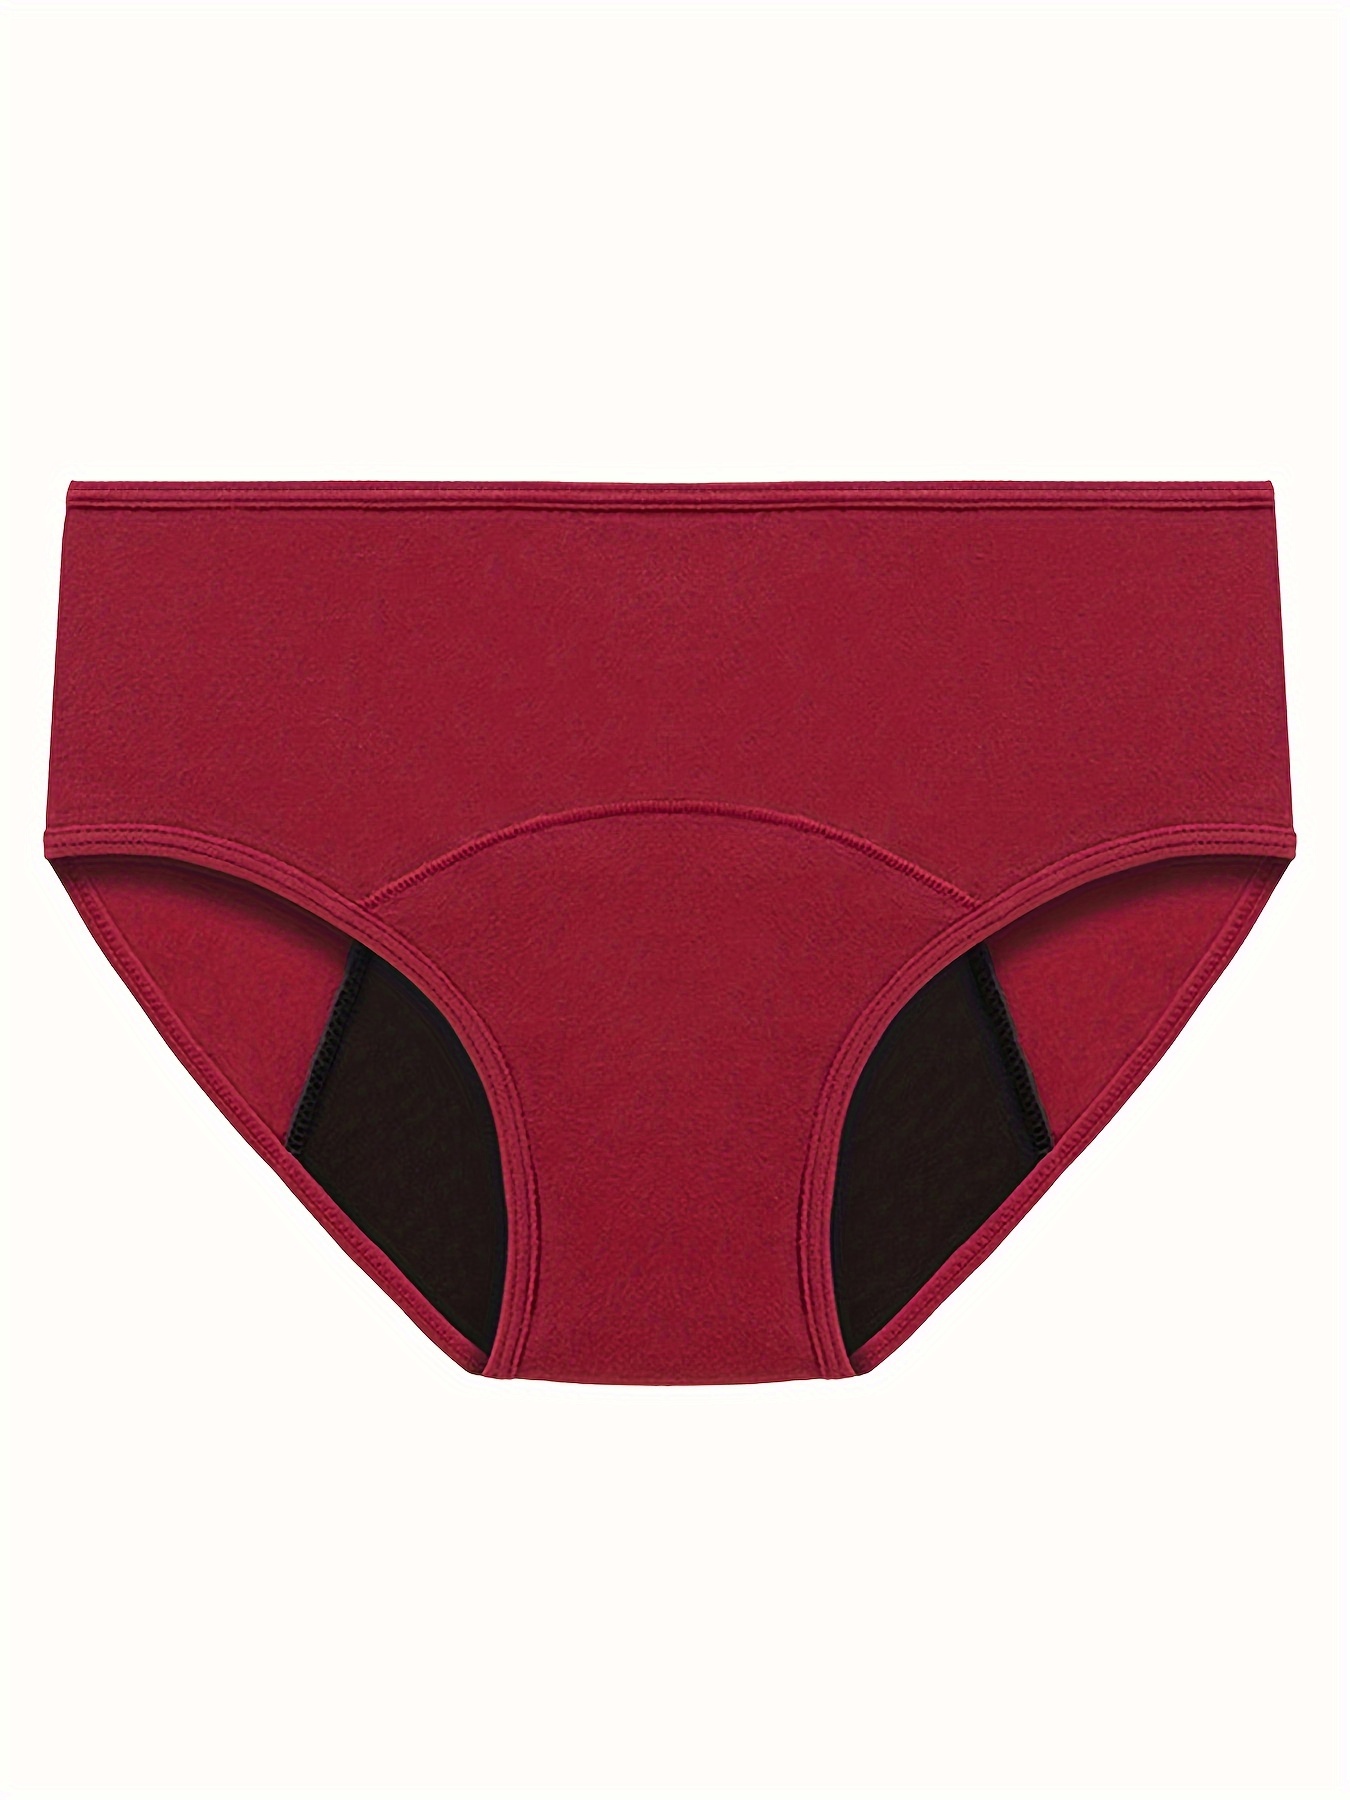 Leak Proof Plus Size Menstrual Panties Physiological Pants Women Underwear  Period Waterproof Briefs Female Lingerie Dropshipping From Qianhaore,  $21.16